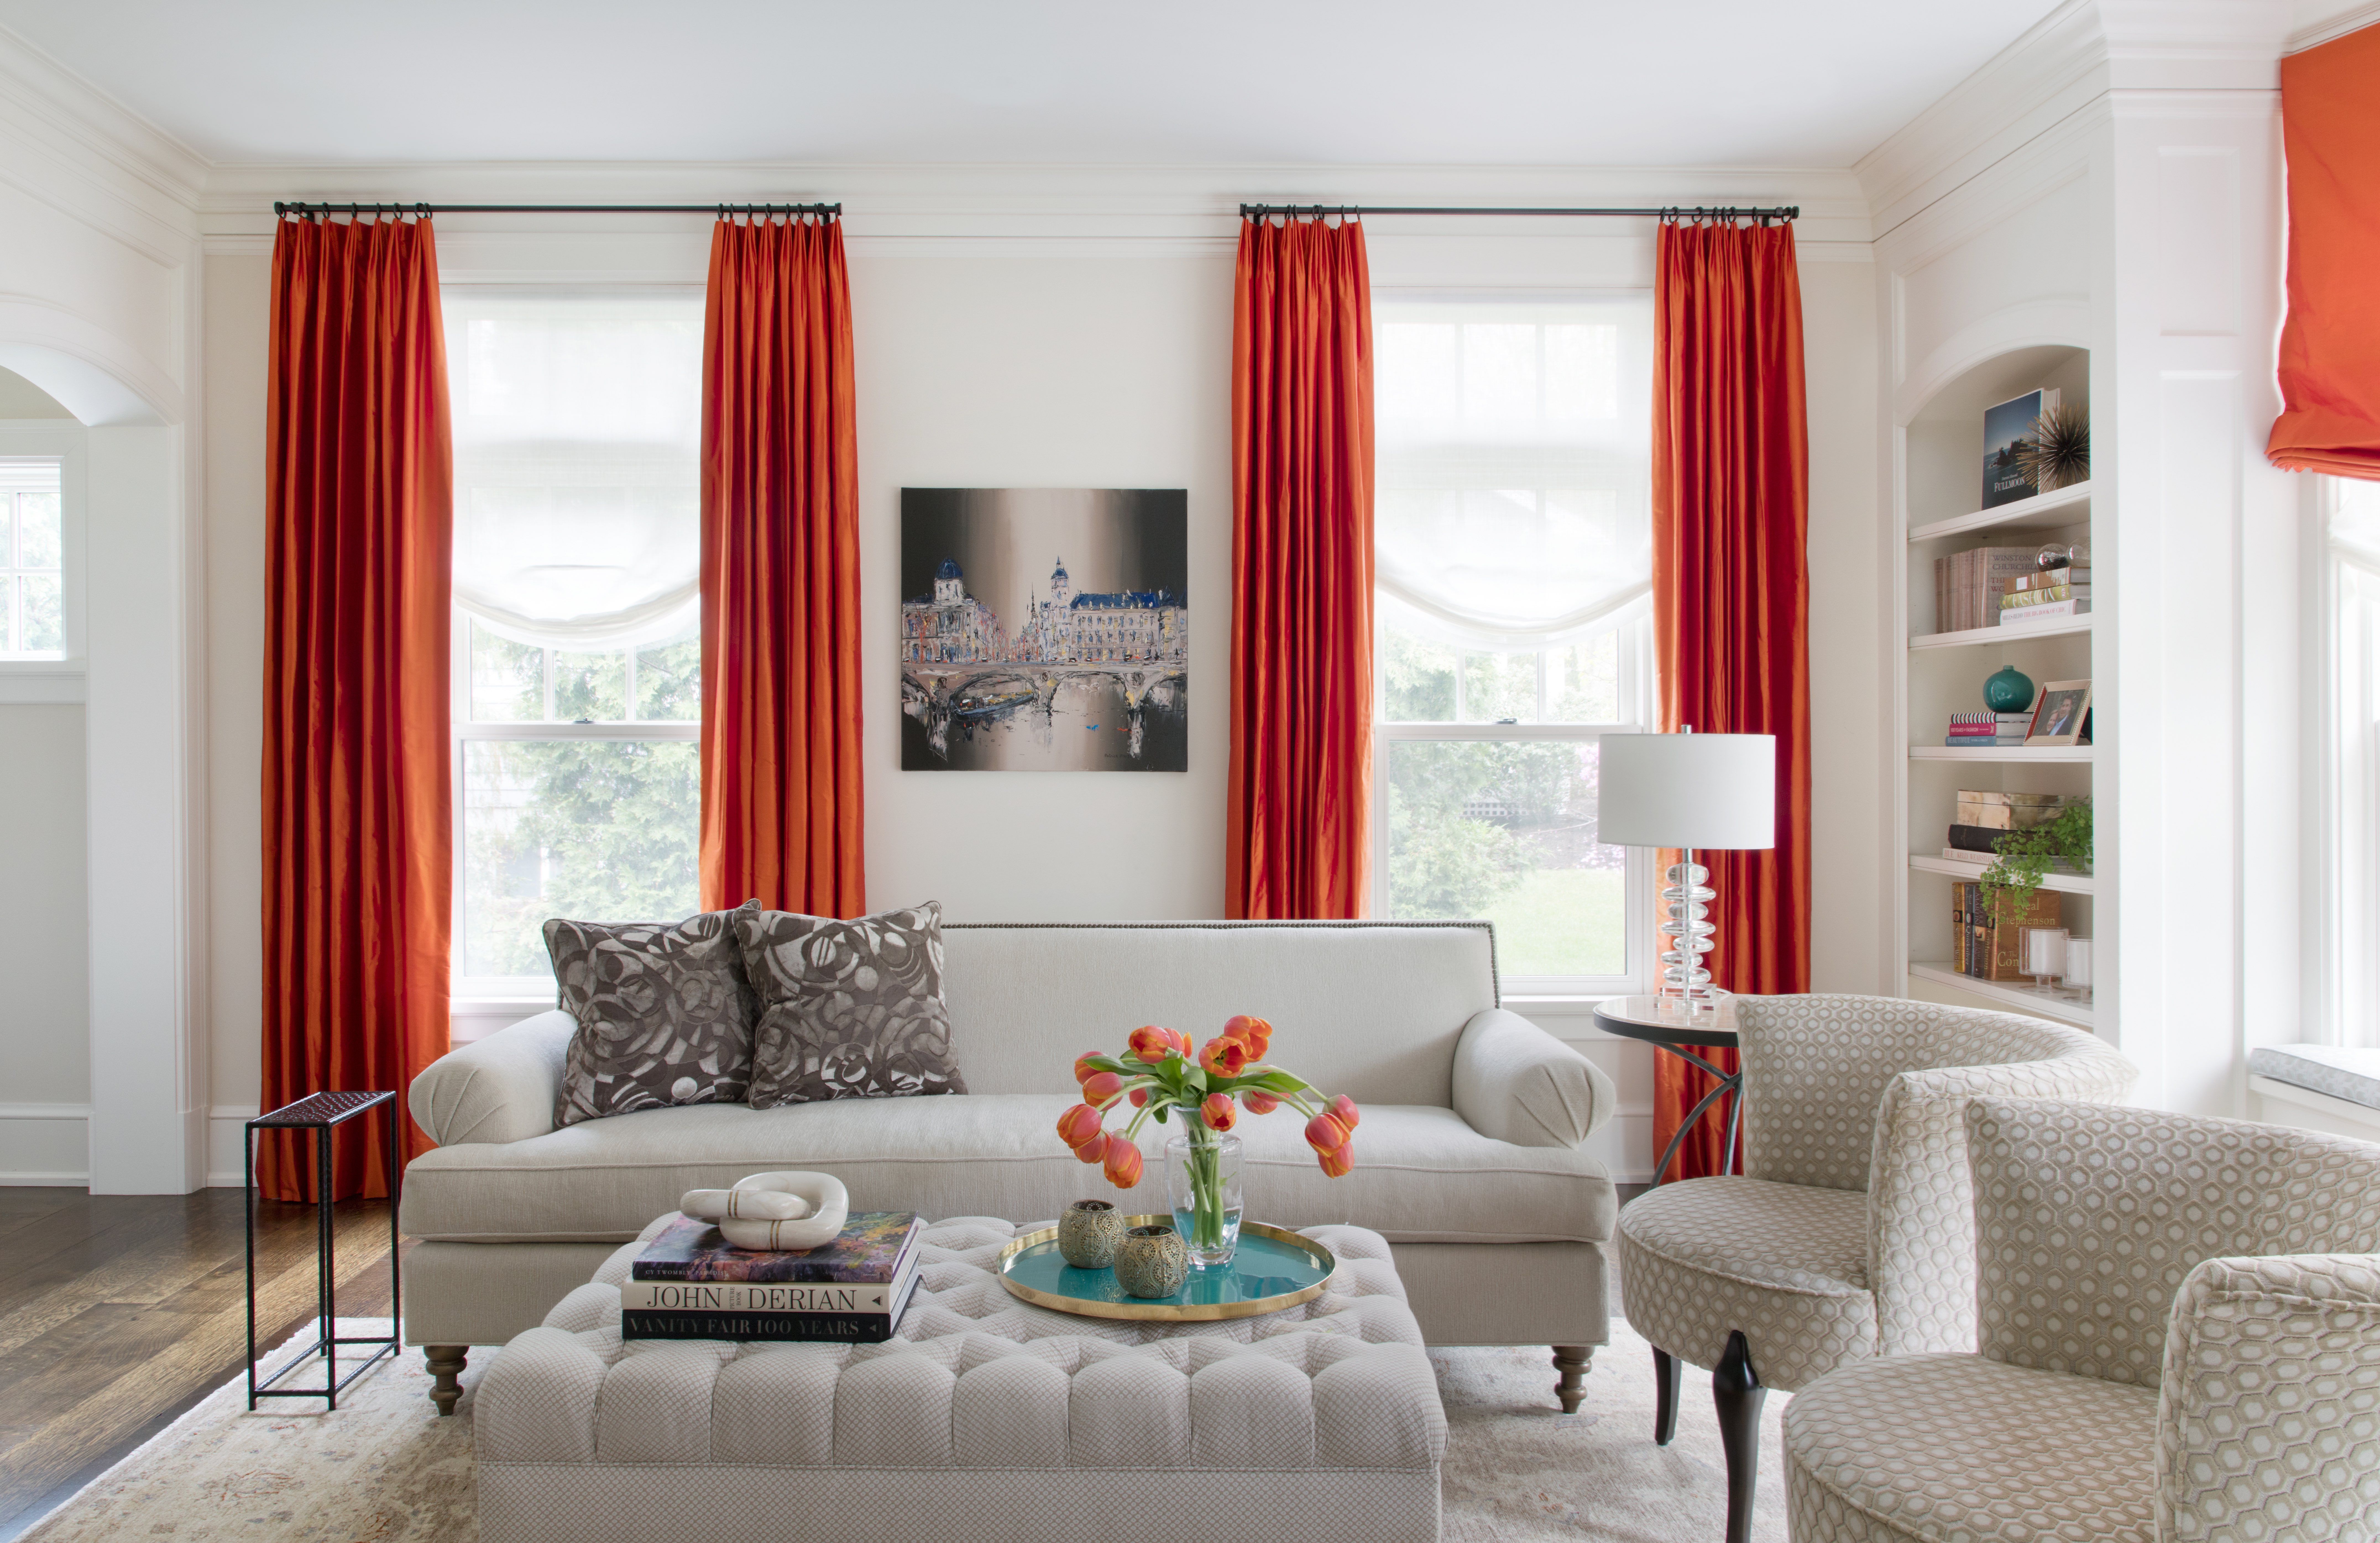 Best Orange Home Decor Tips - How to Decorate with Orange